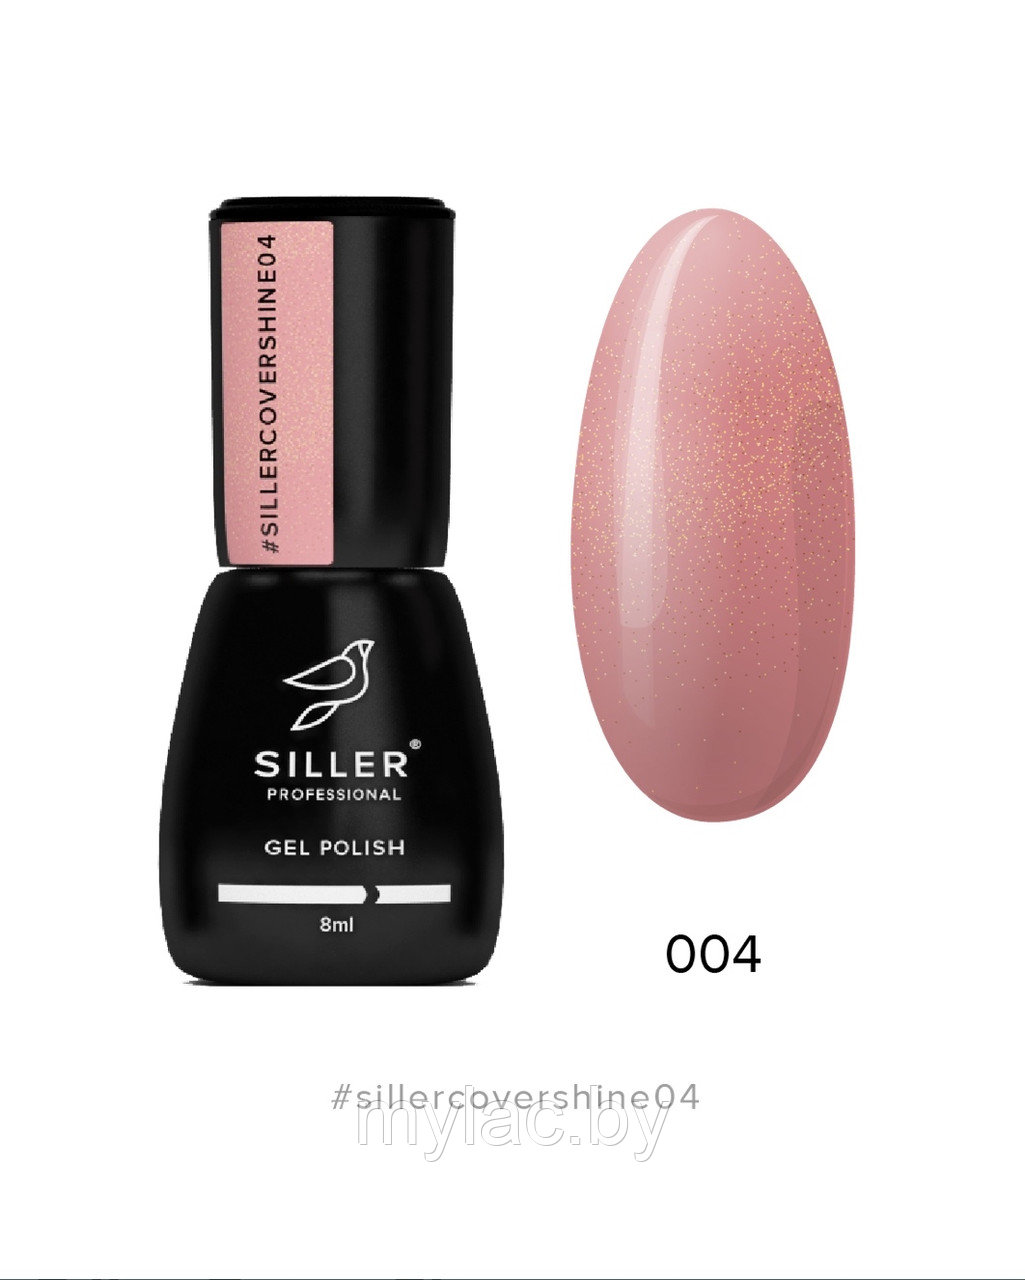 Siller Cover Shine Base №4 — камуфлирующая база (розово-бежевая с микроблеском), 8мл